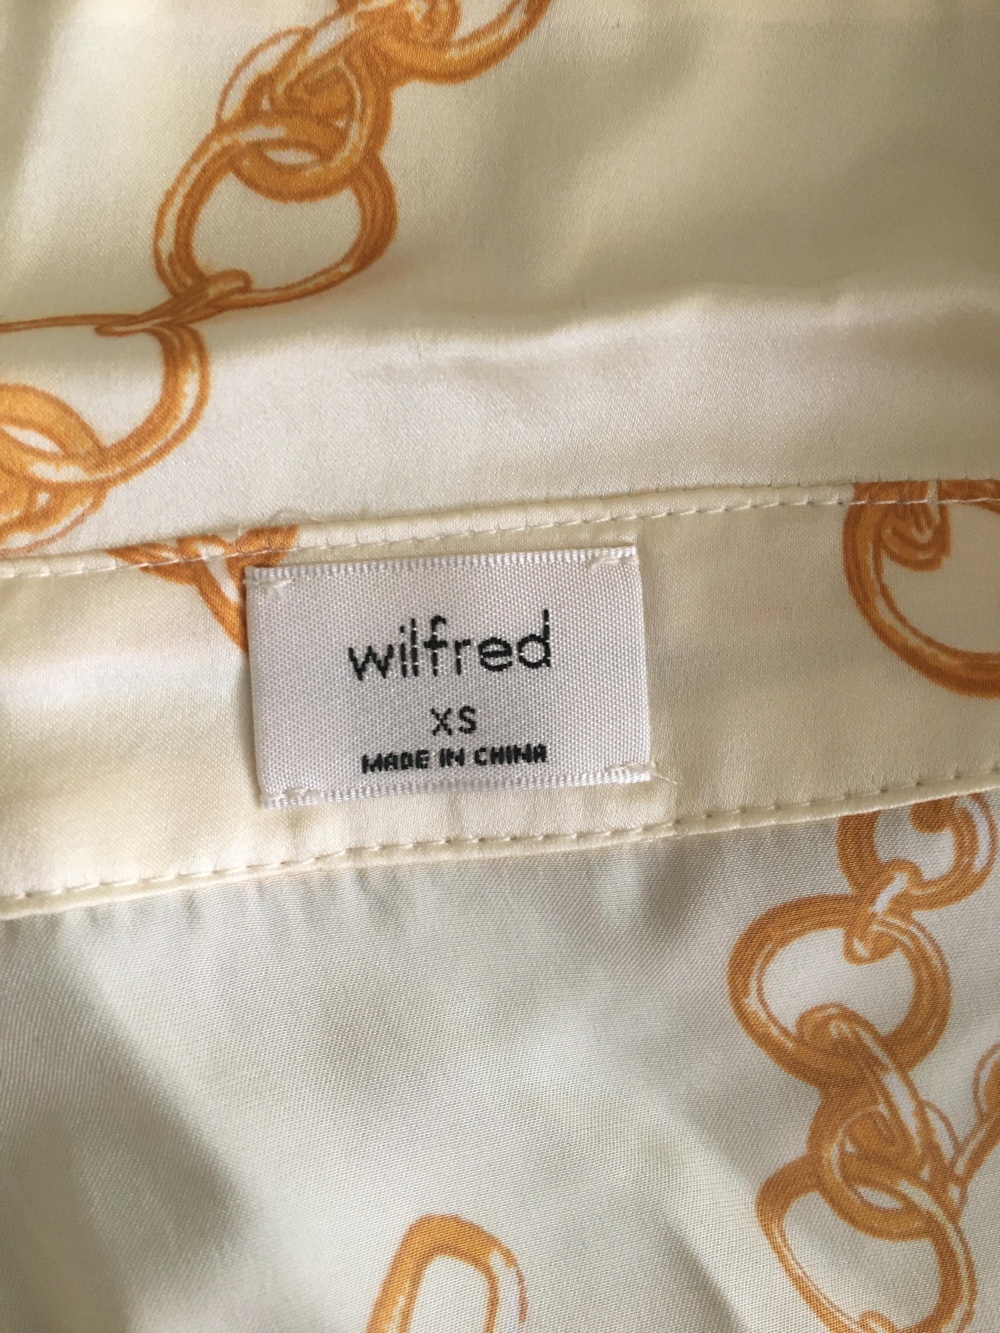 Шелковая рубашка Wilfred, размер XS